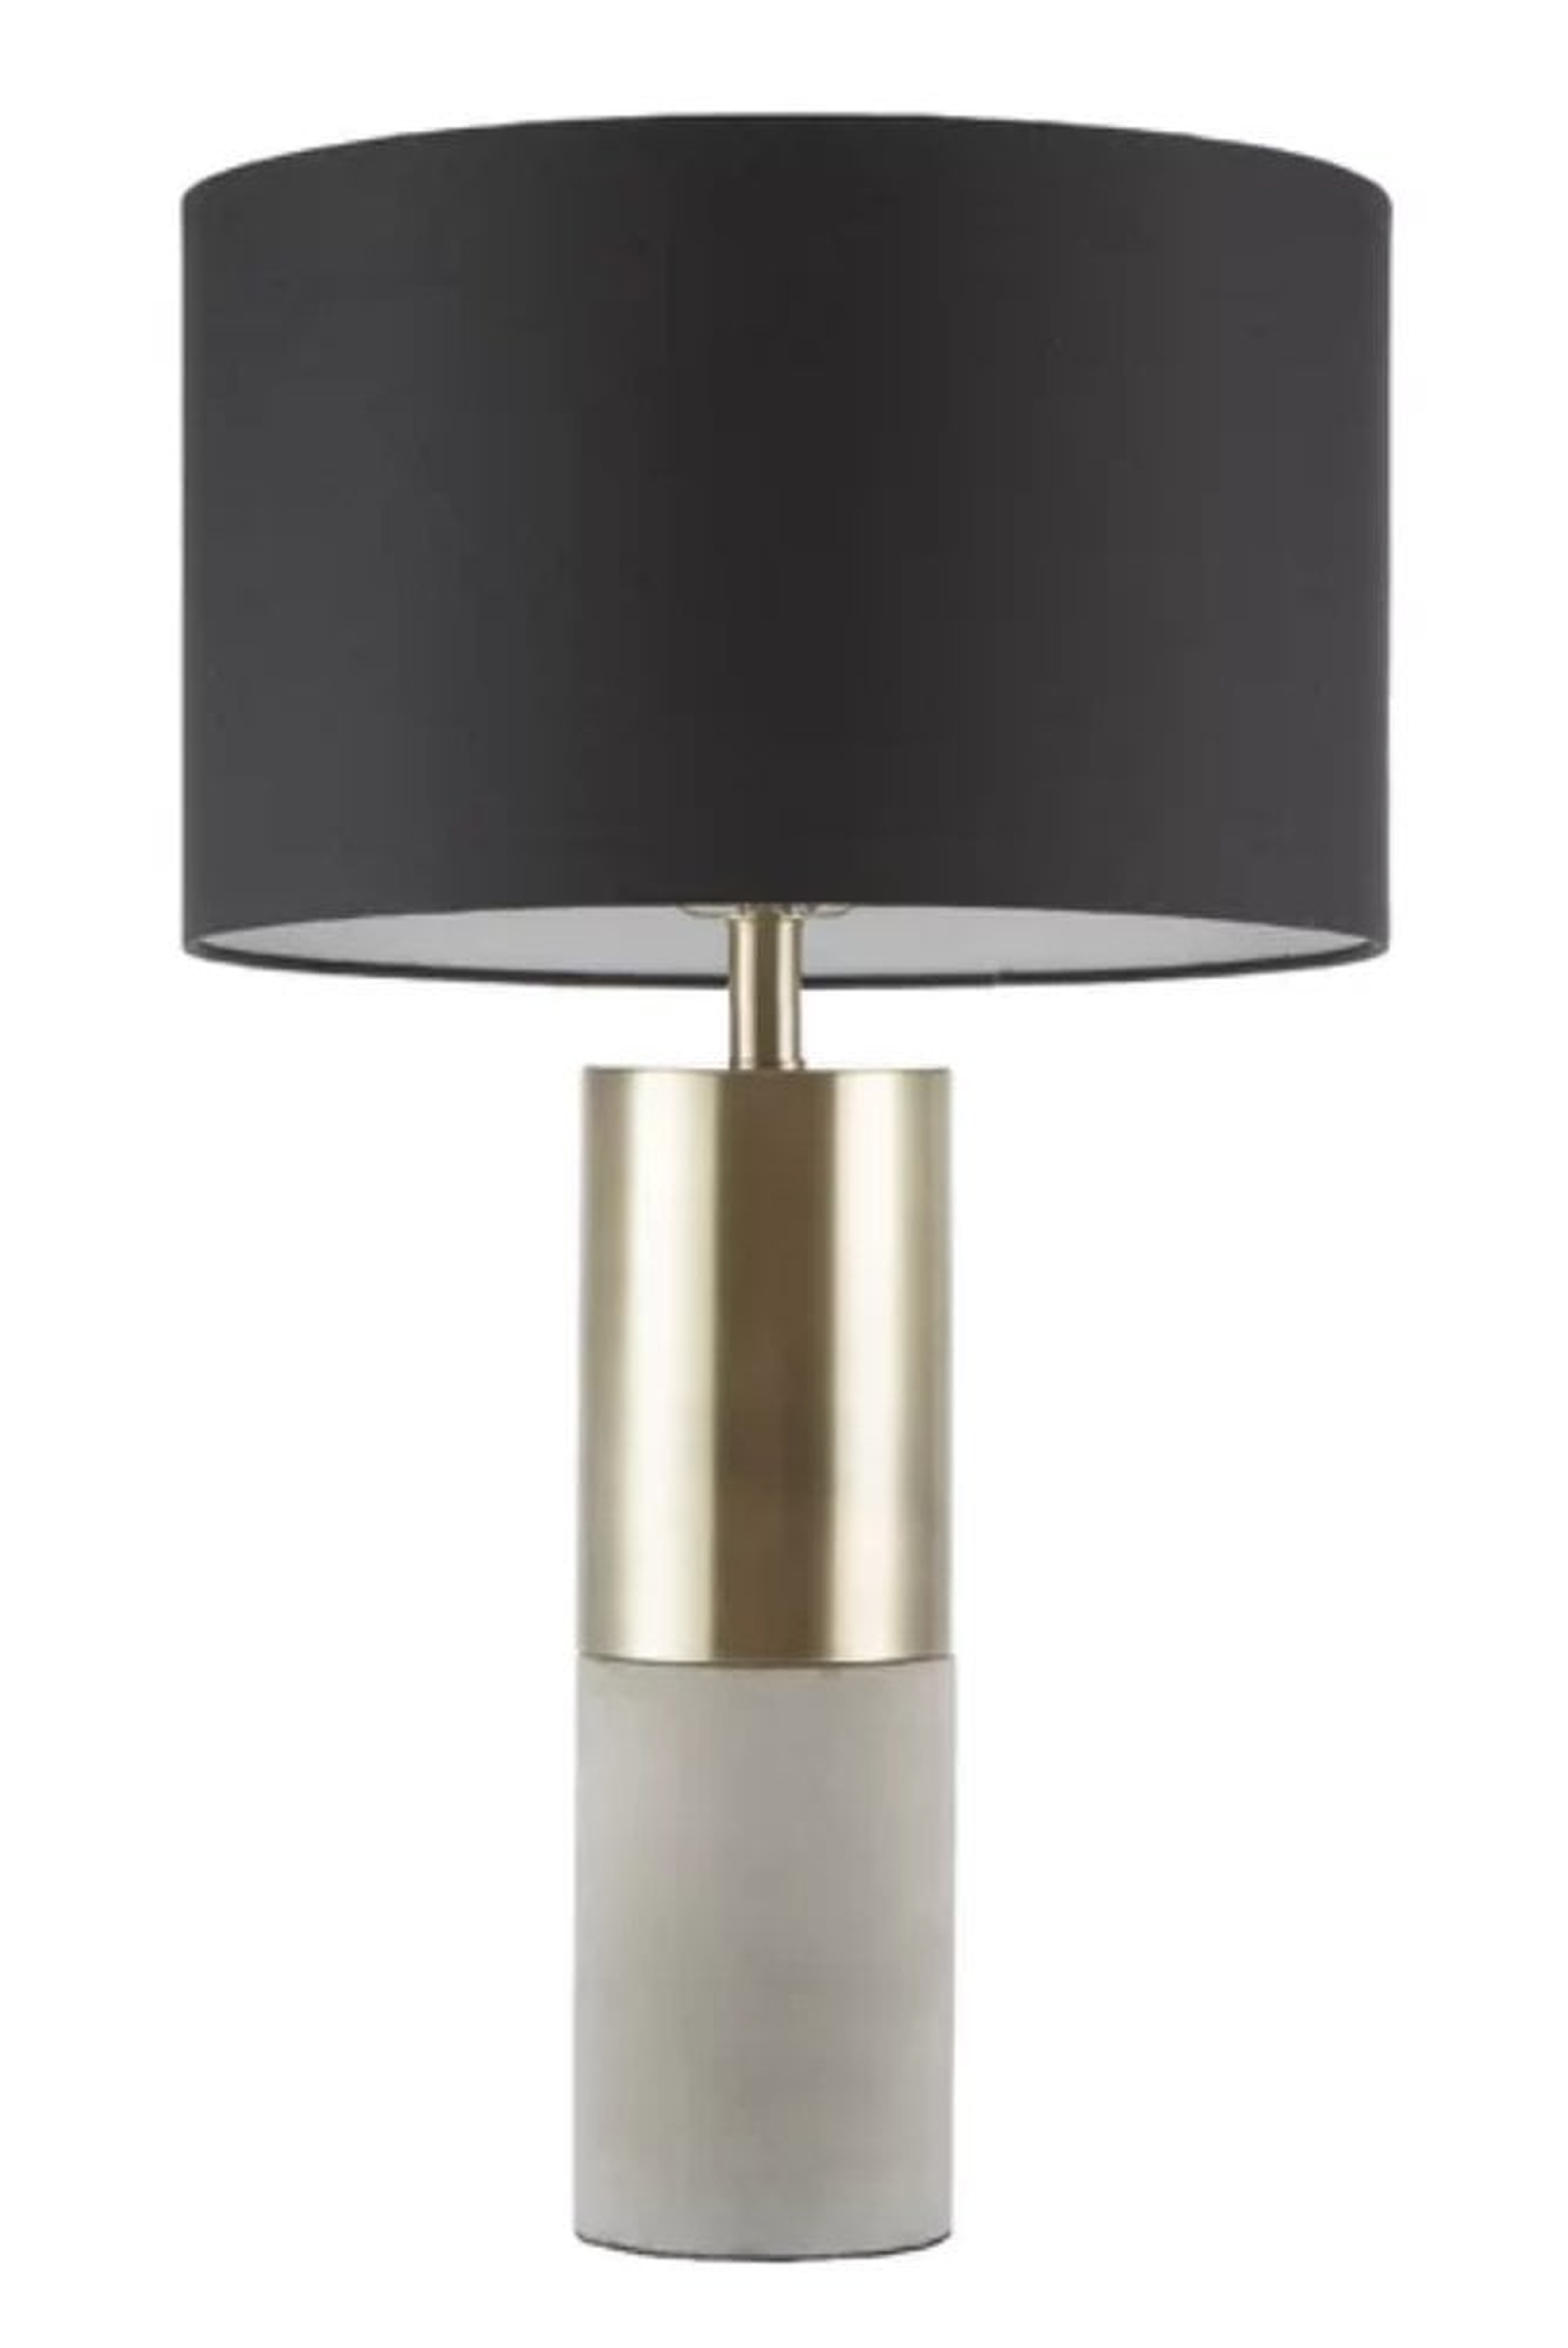 Fulton 28" Table lamp - Wayfair